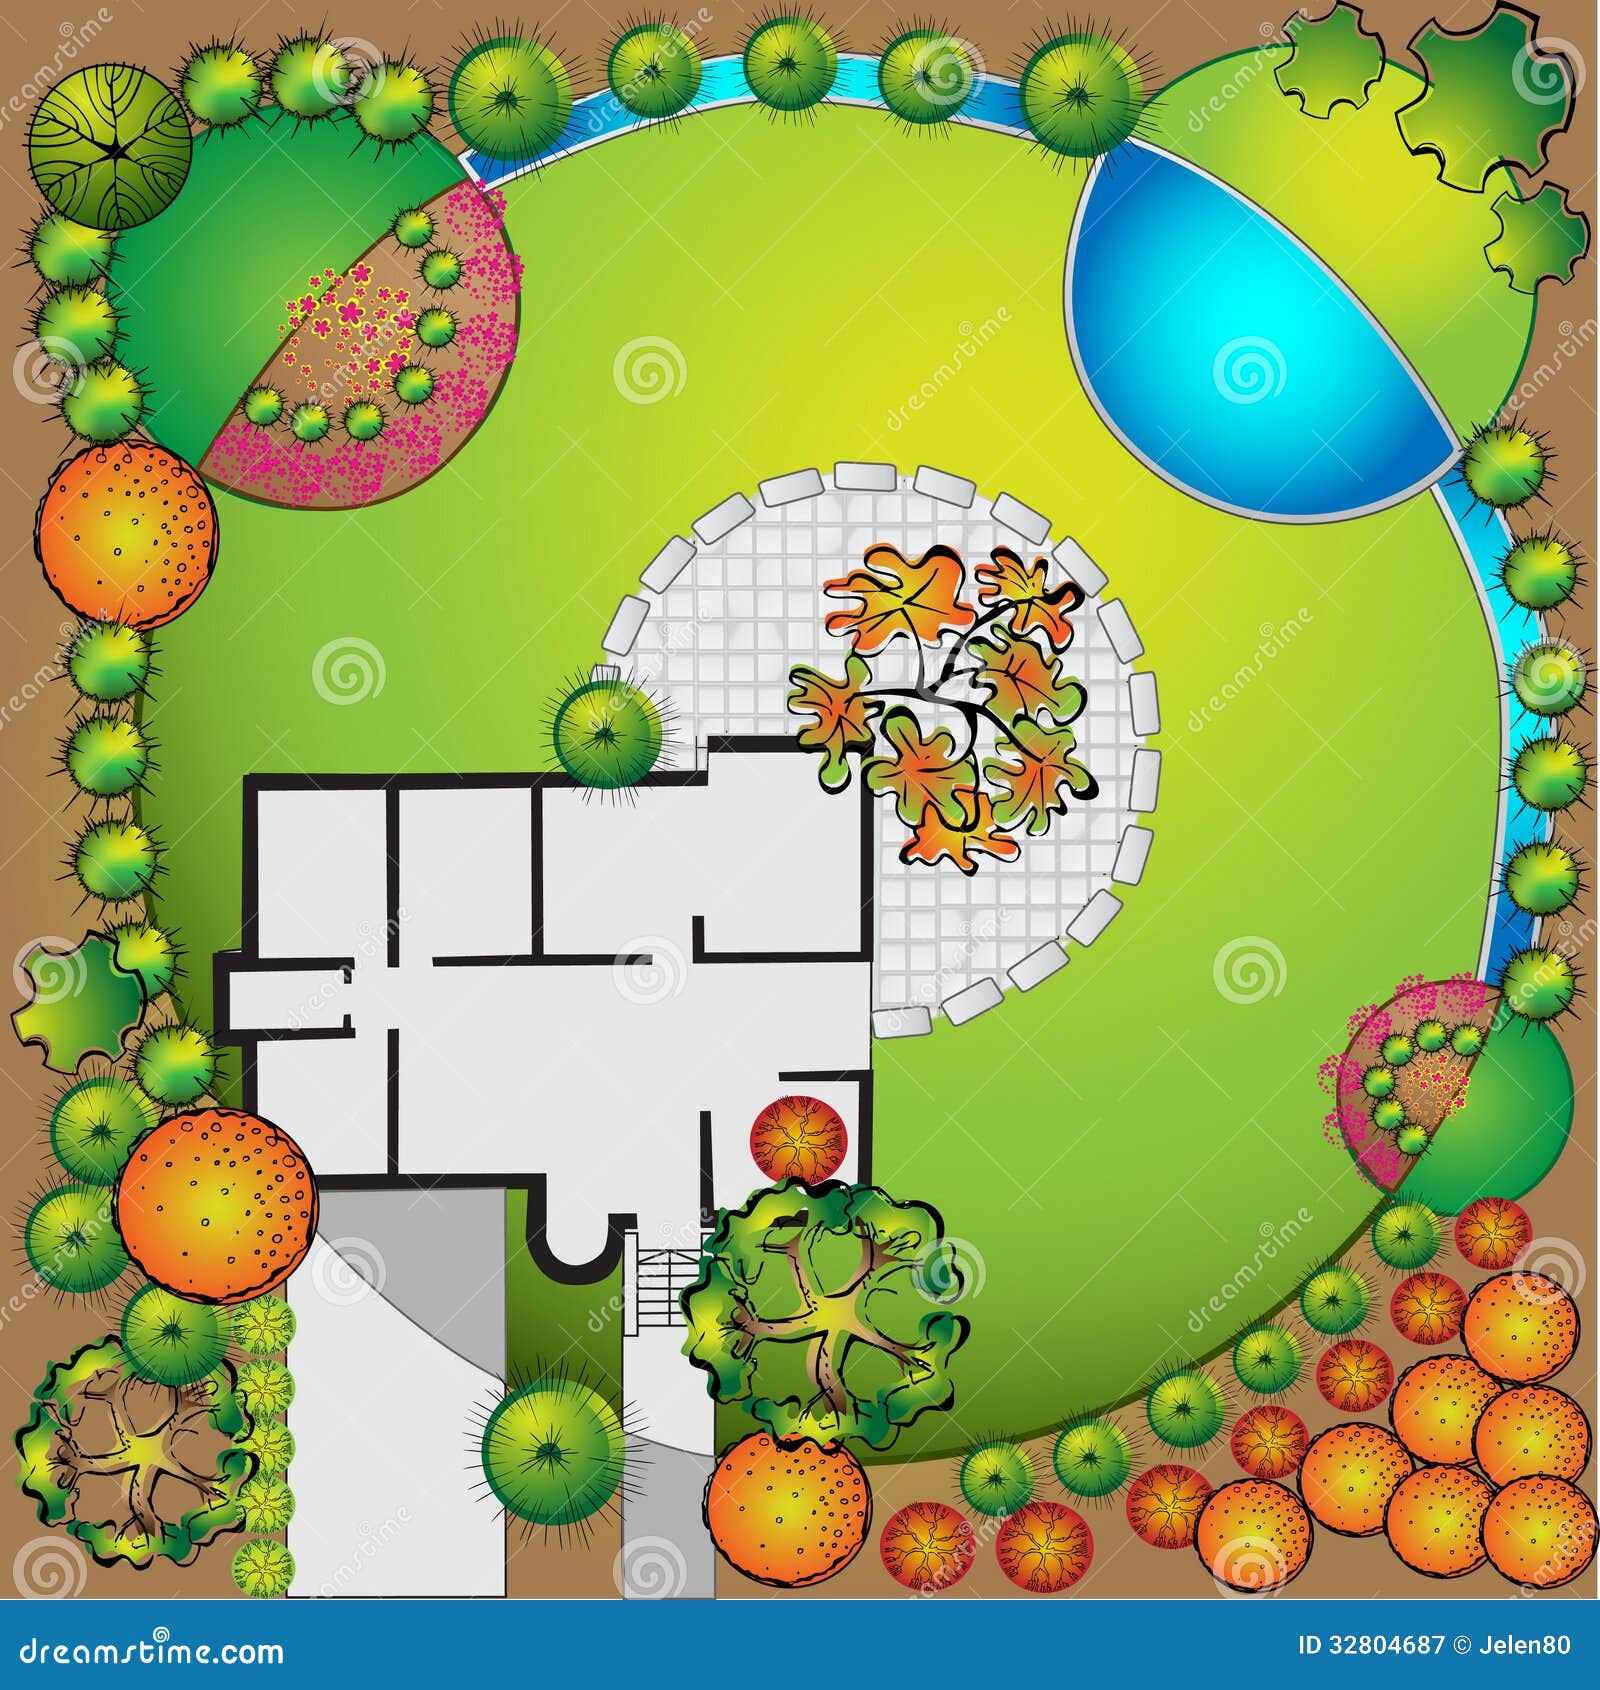 Plan of garden stock vector. Illustration of outdoor - 32804687